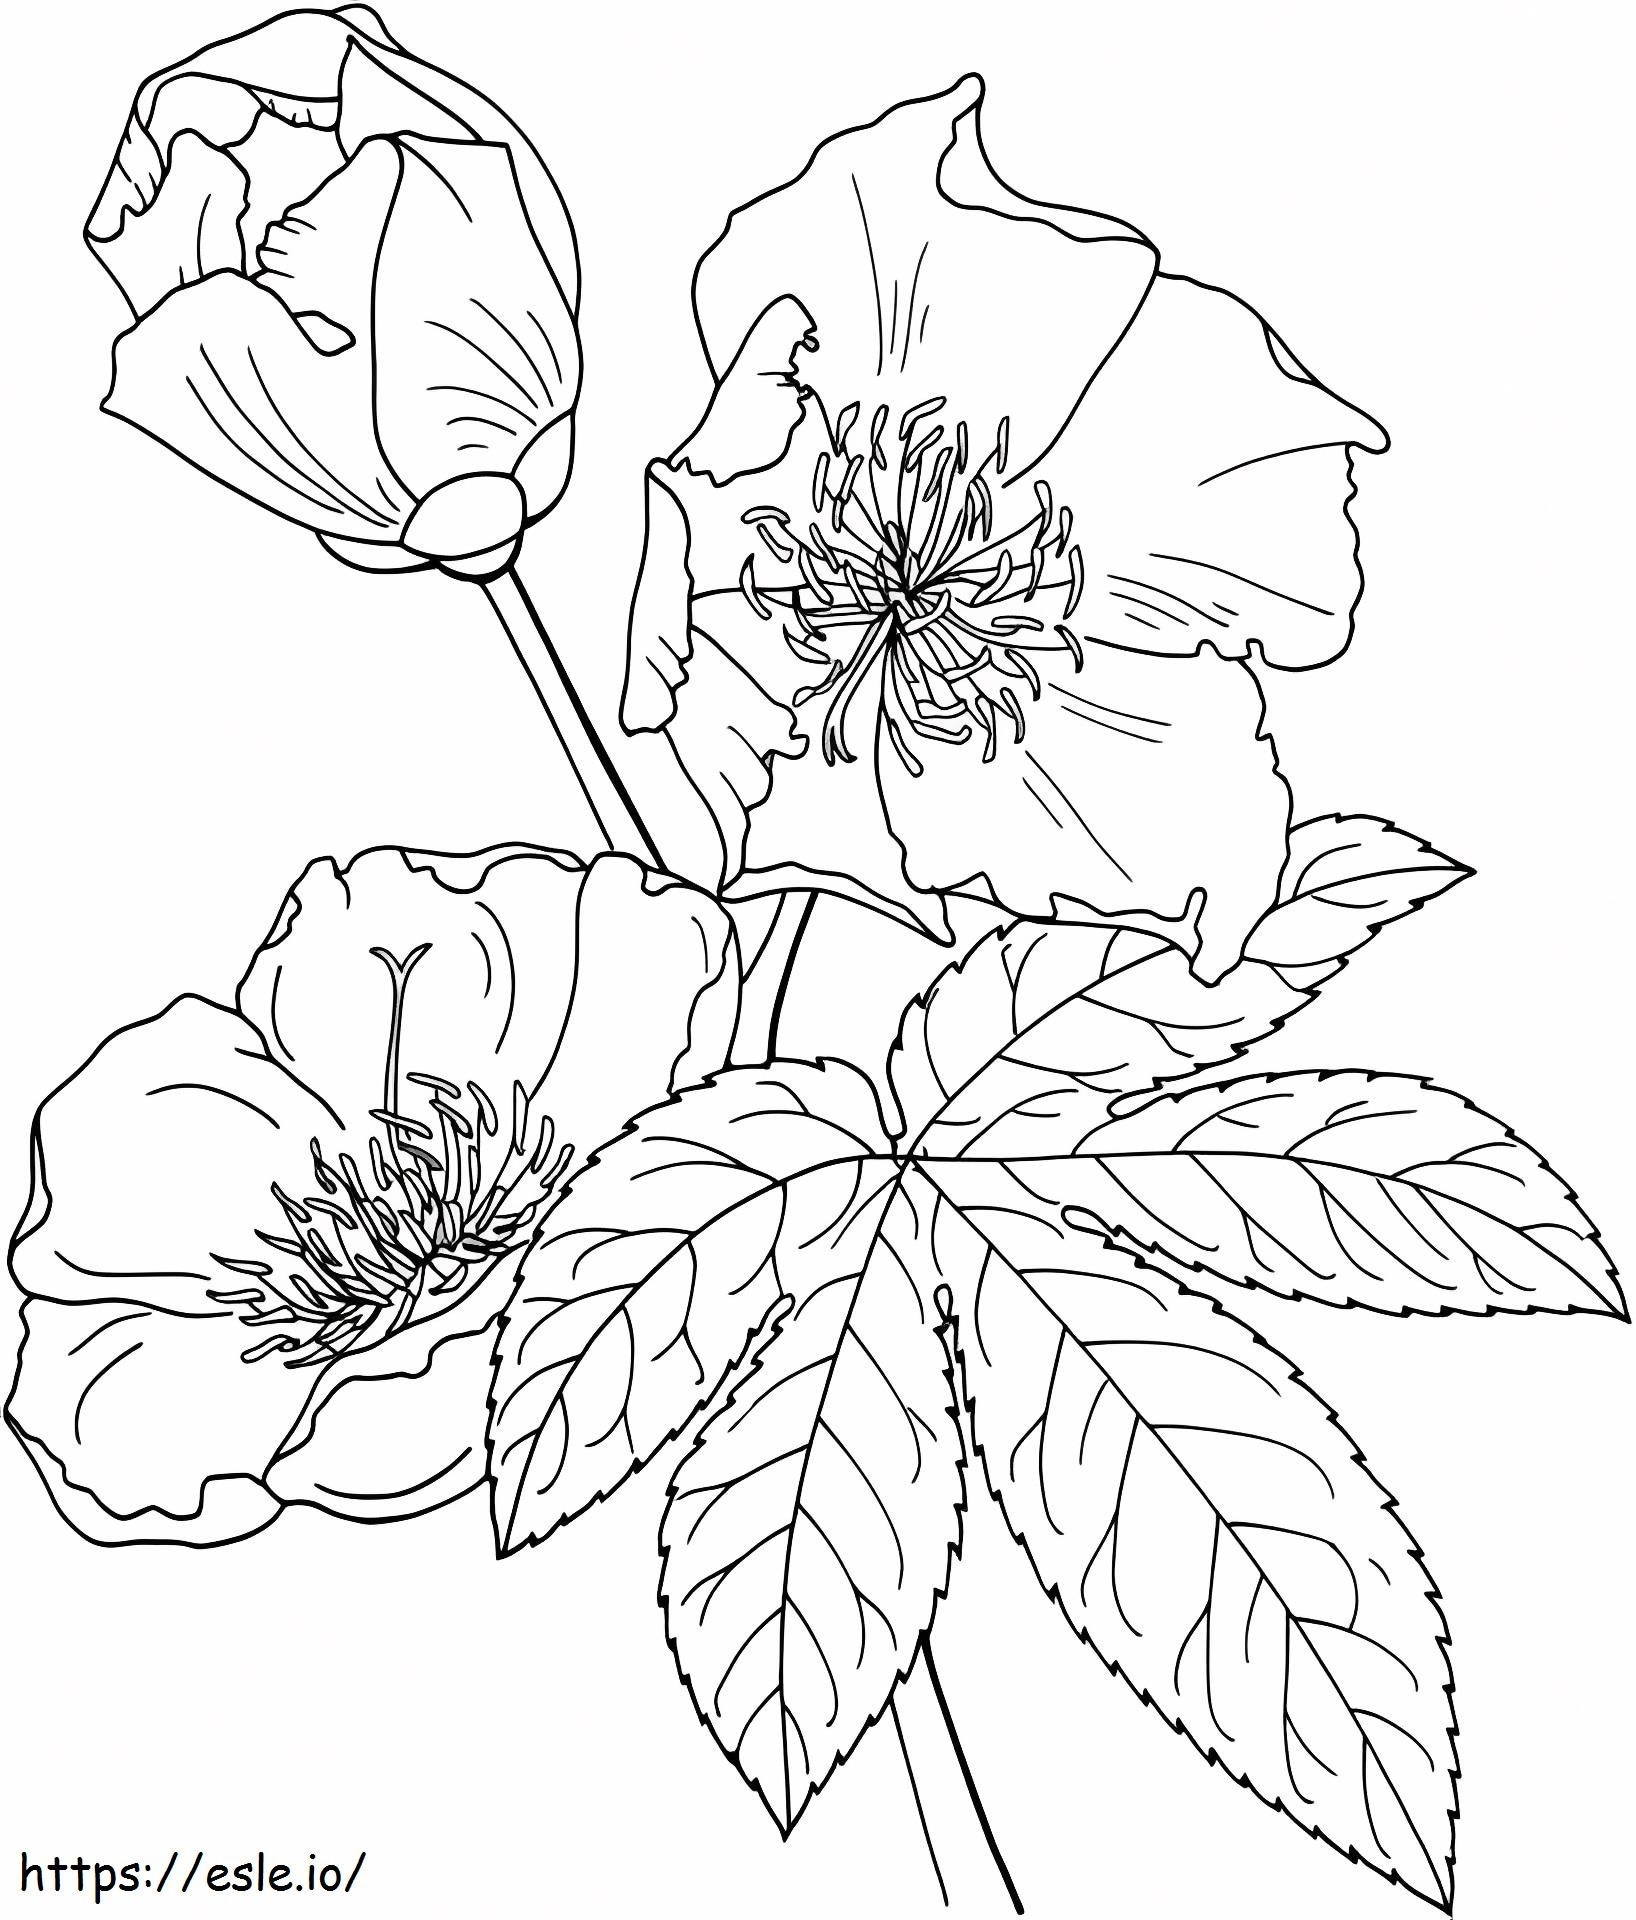 1527065135_Cochlospermum Vitifolium o árbol de ranúnculo para colorear